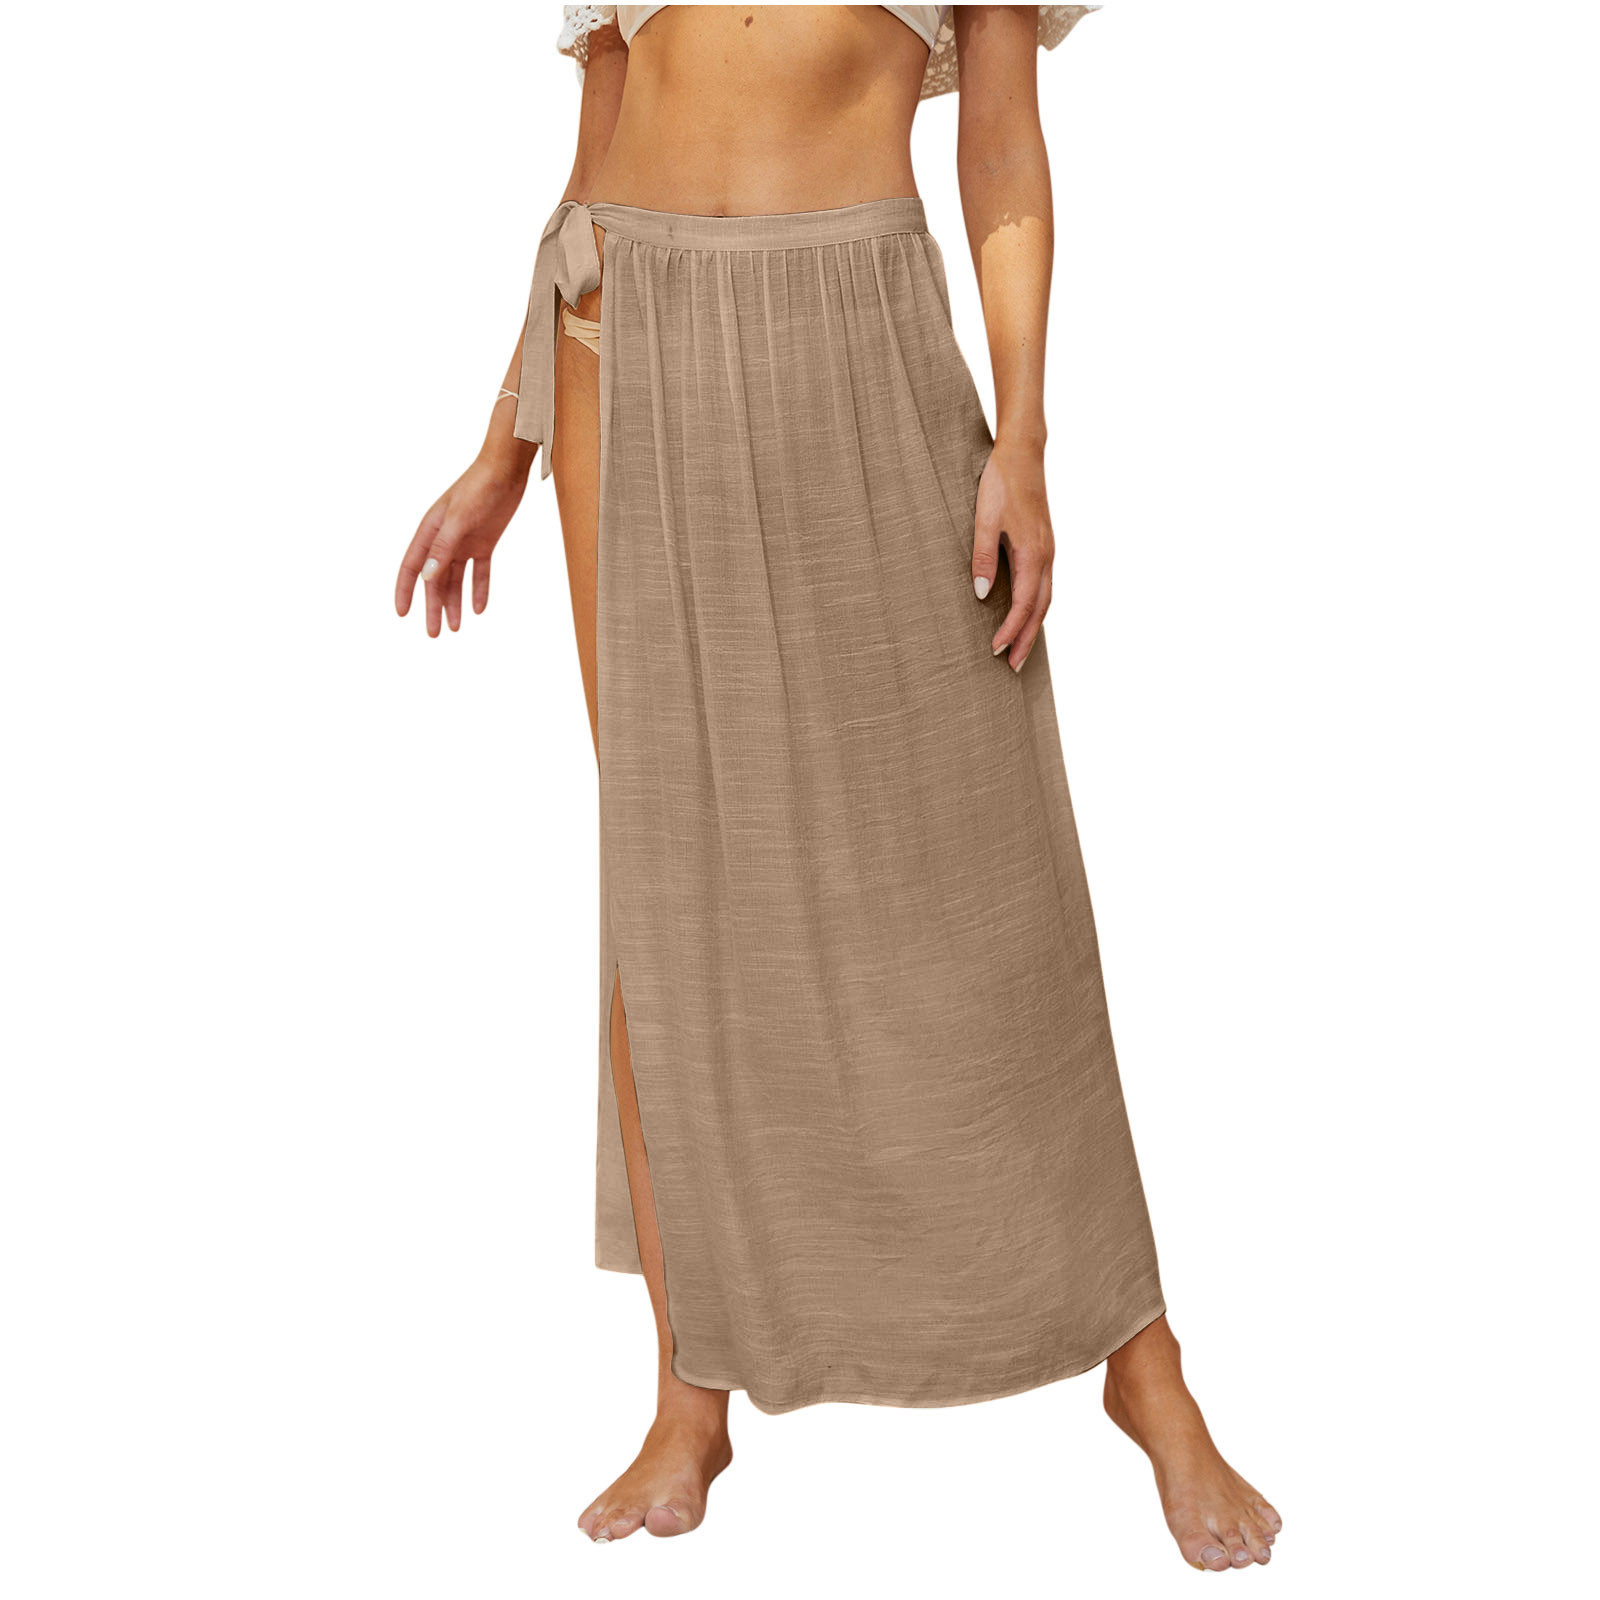 Lilgiuy Women Solid Swimsuit Cover Up Mesh Bikini Swimwear Beach Cover-Ups Wrap Skirt - image 1 of 4